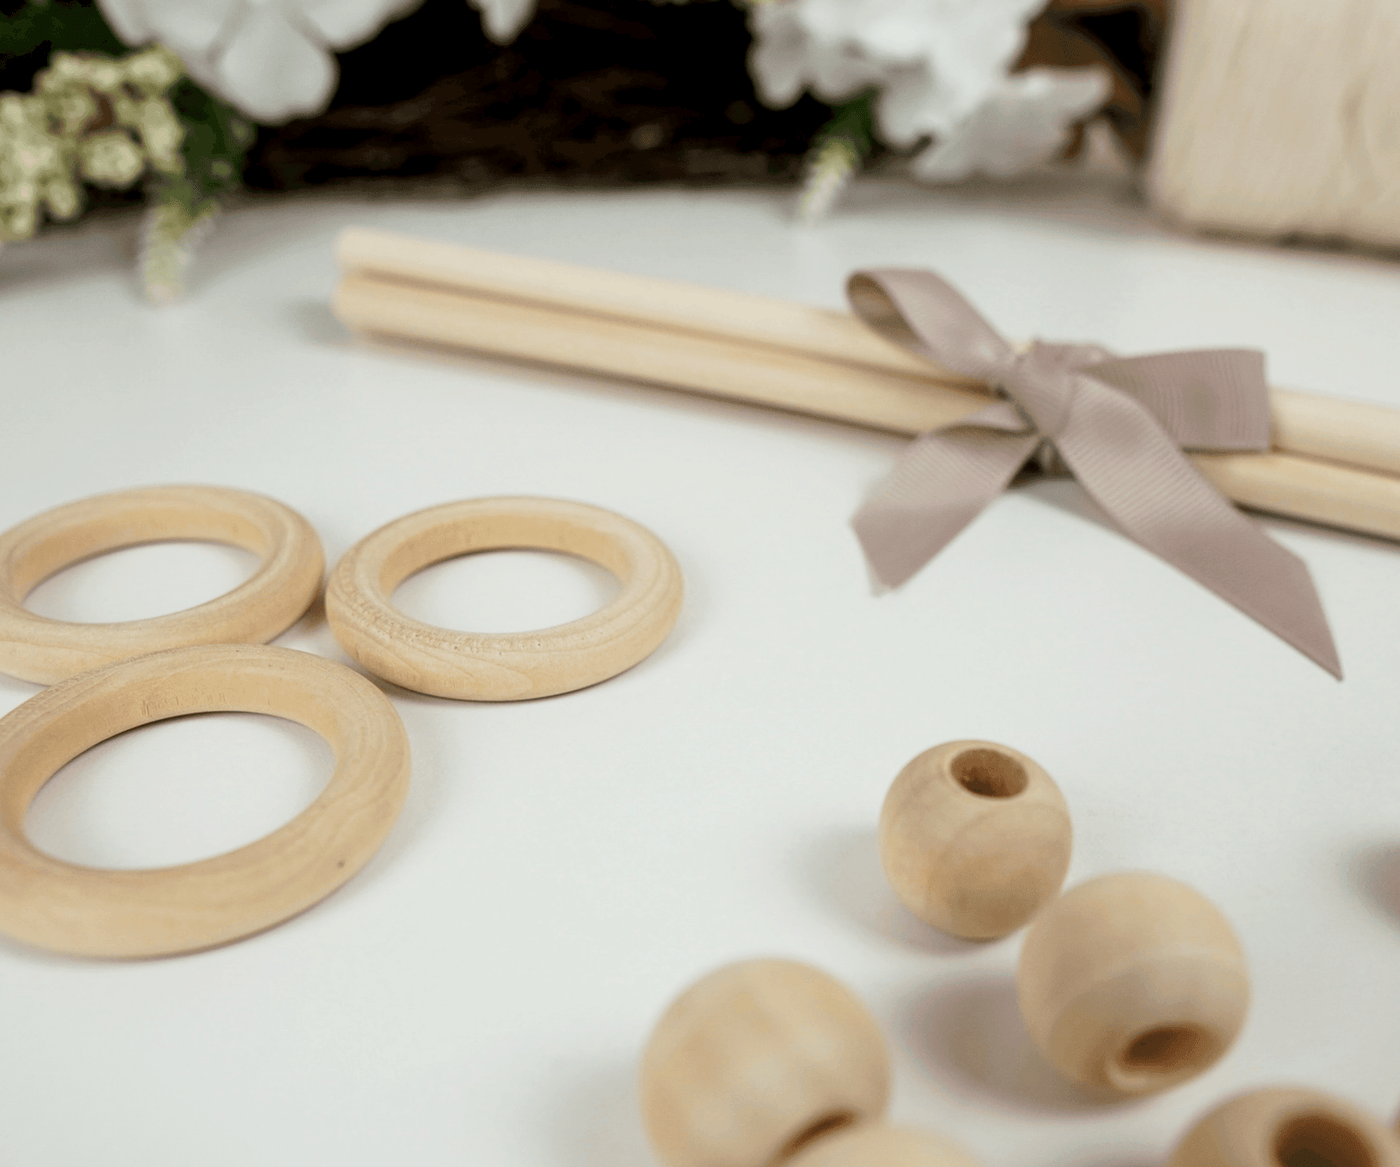 Wooden Rings 2" (10pack) - Bochiknot